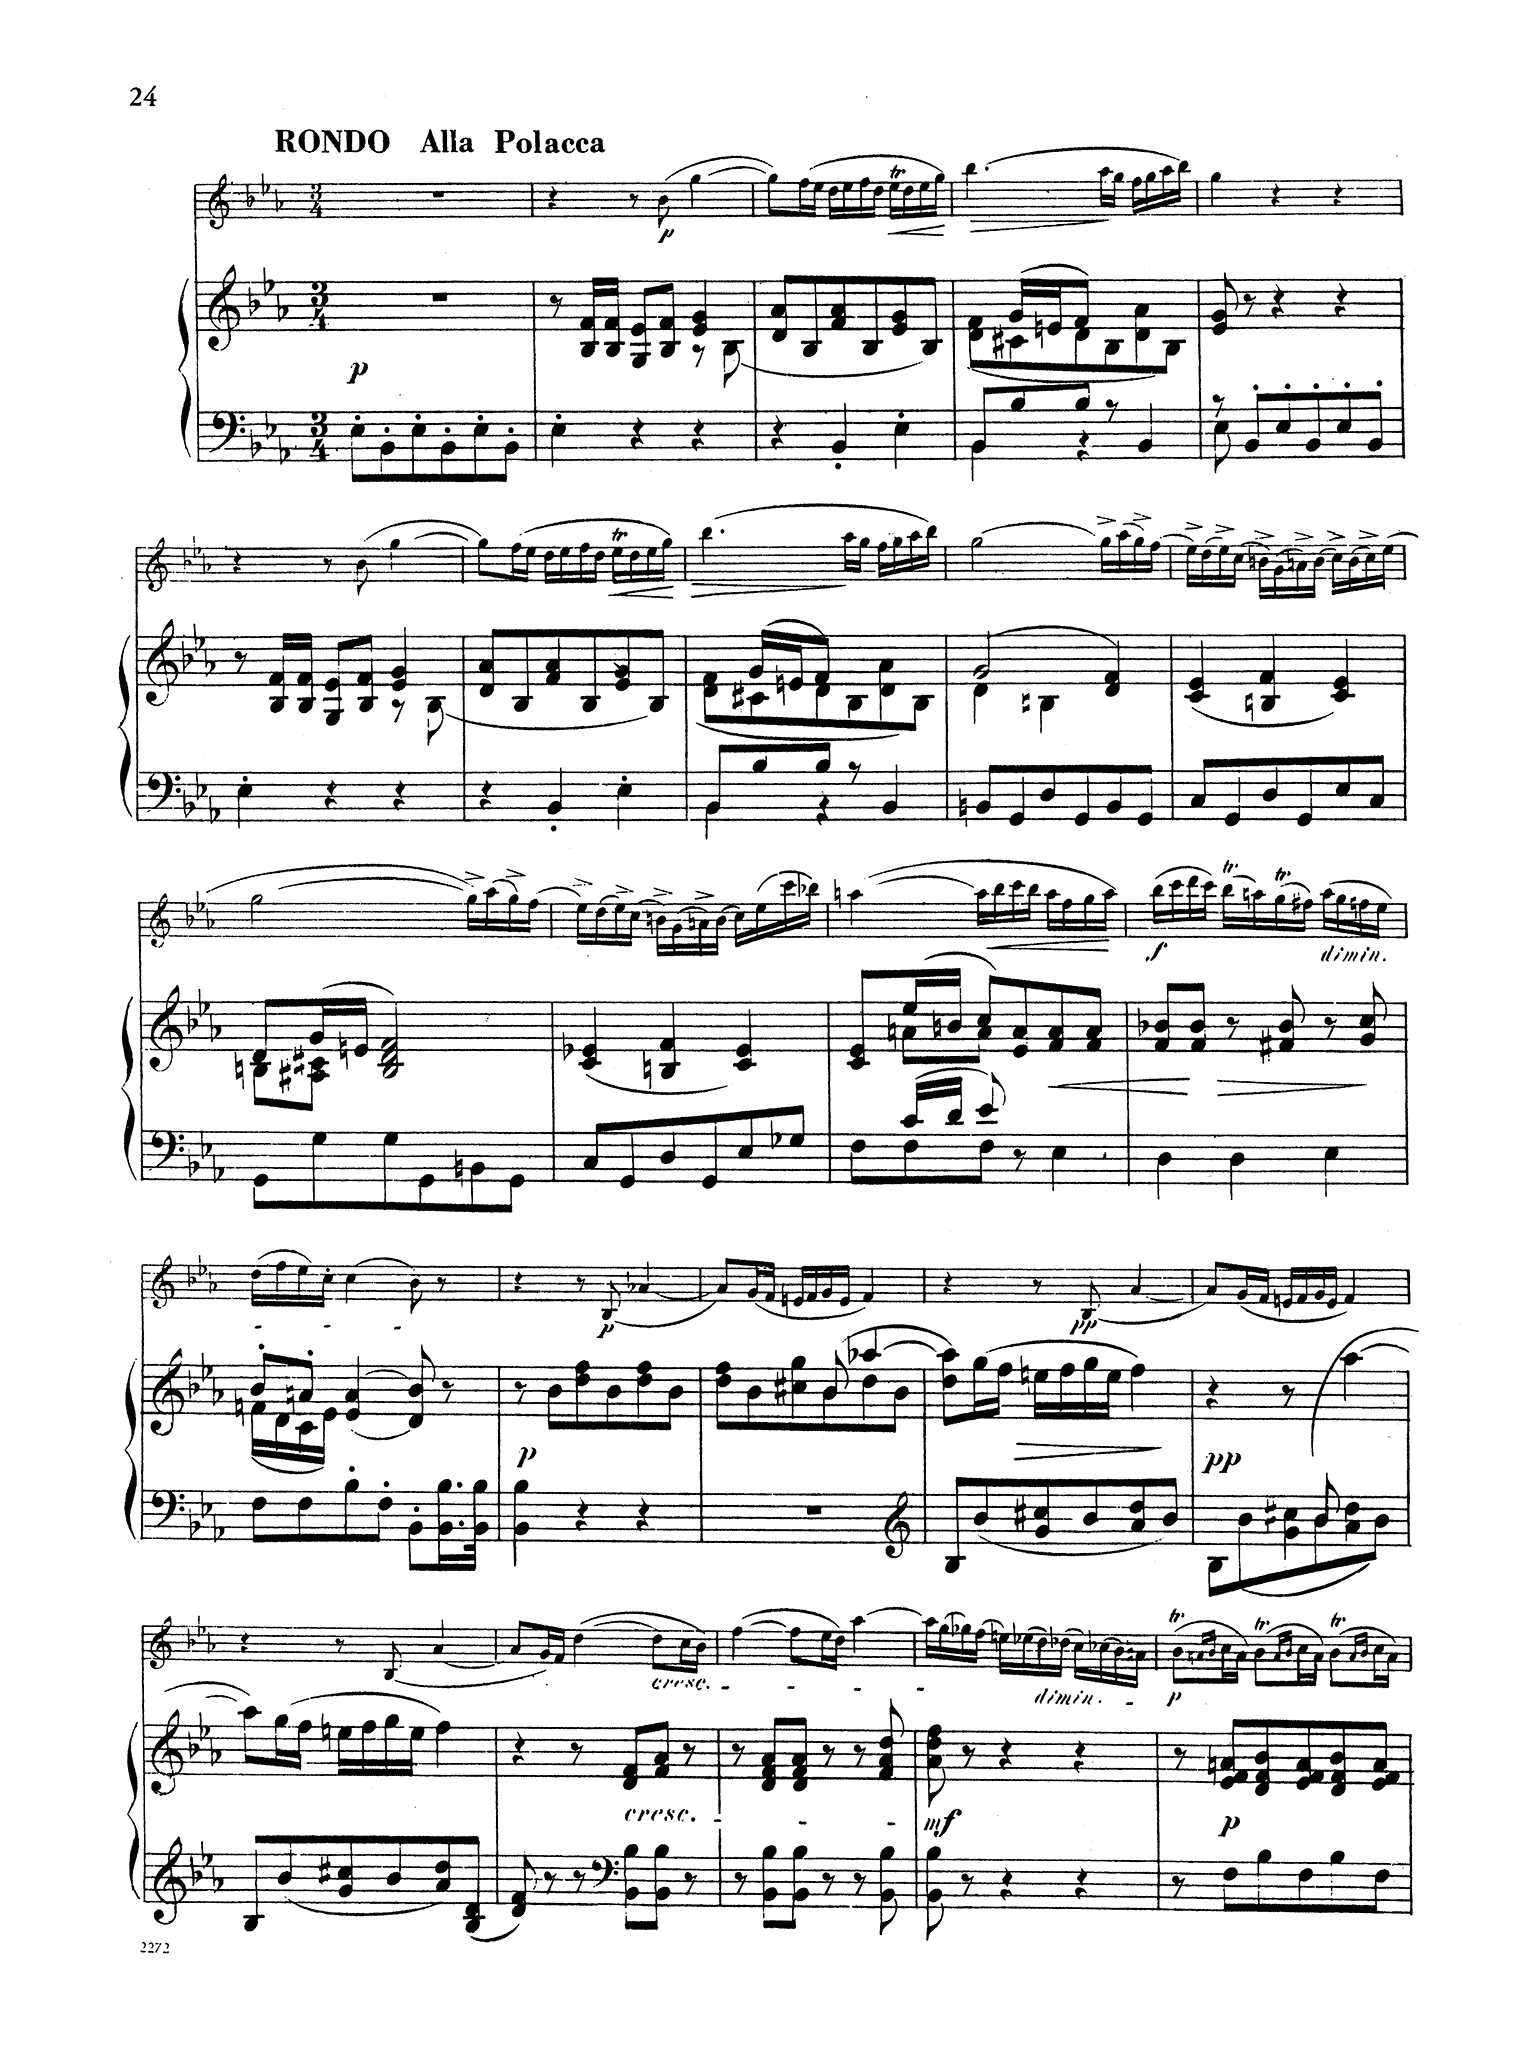 Clarinet Concerto No. 2 in E-flat Major, Op. 57 - Movement 3